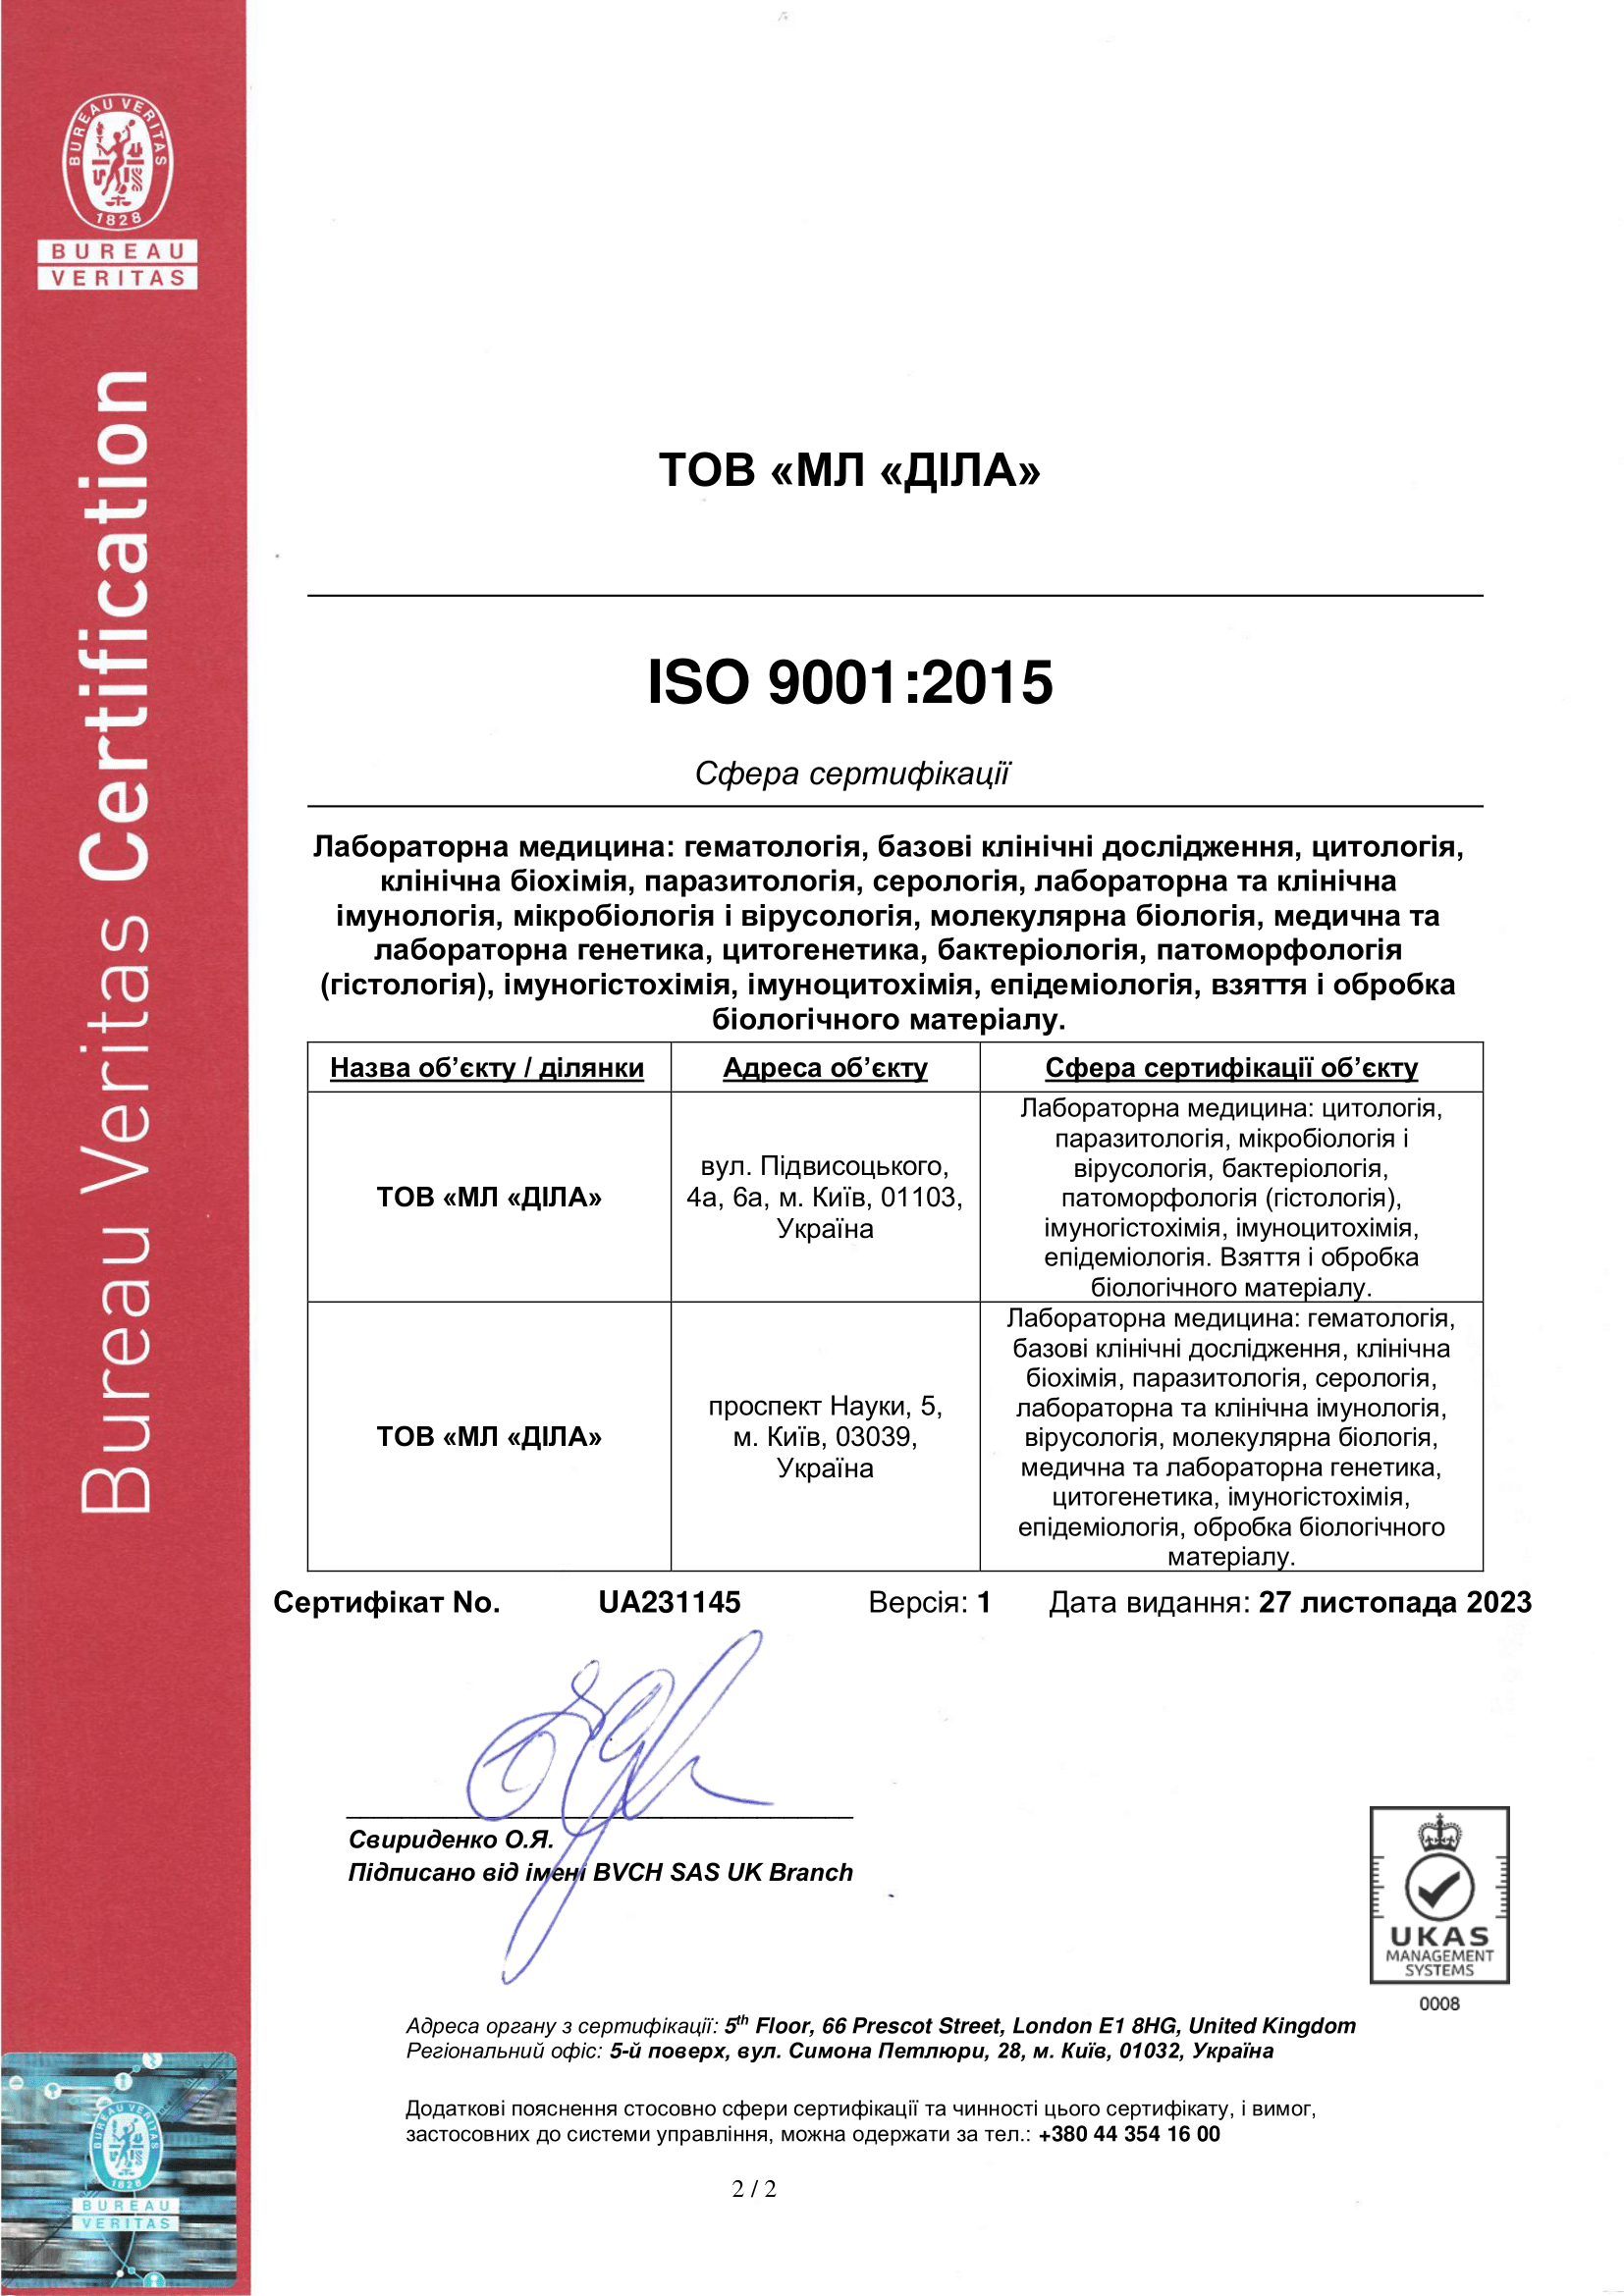 Фото - Сертификат соответствия ISO 9001:2015